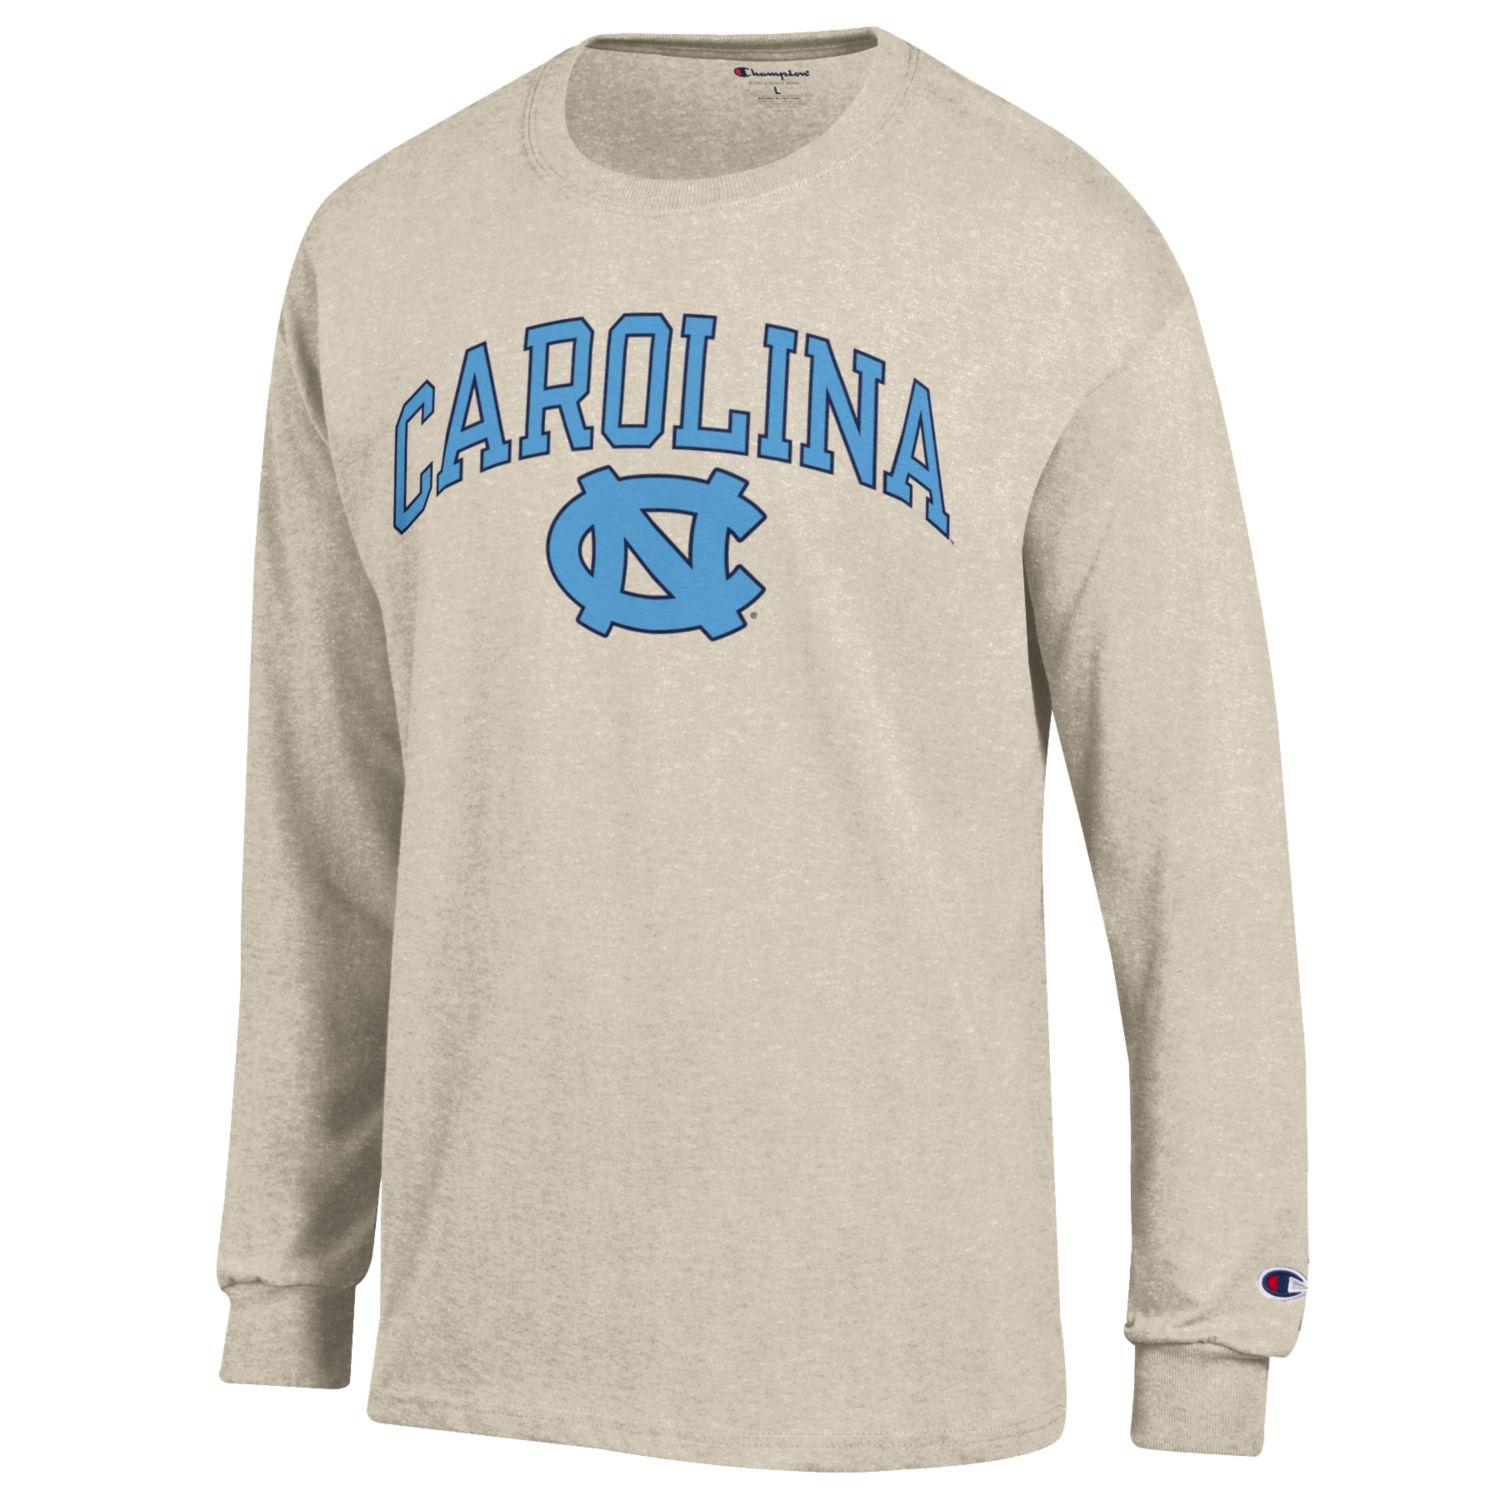 Champion - Carolina and UNC Logo Long-Sleeve Shirt